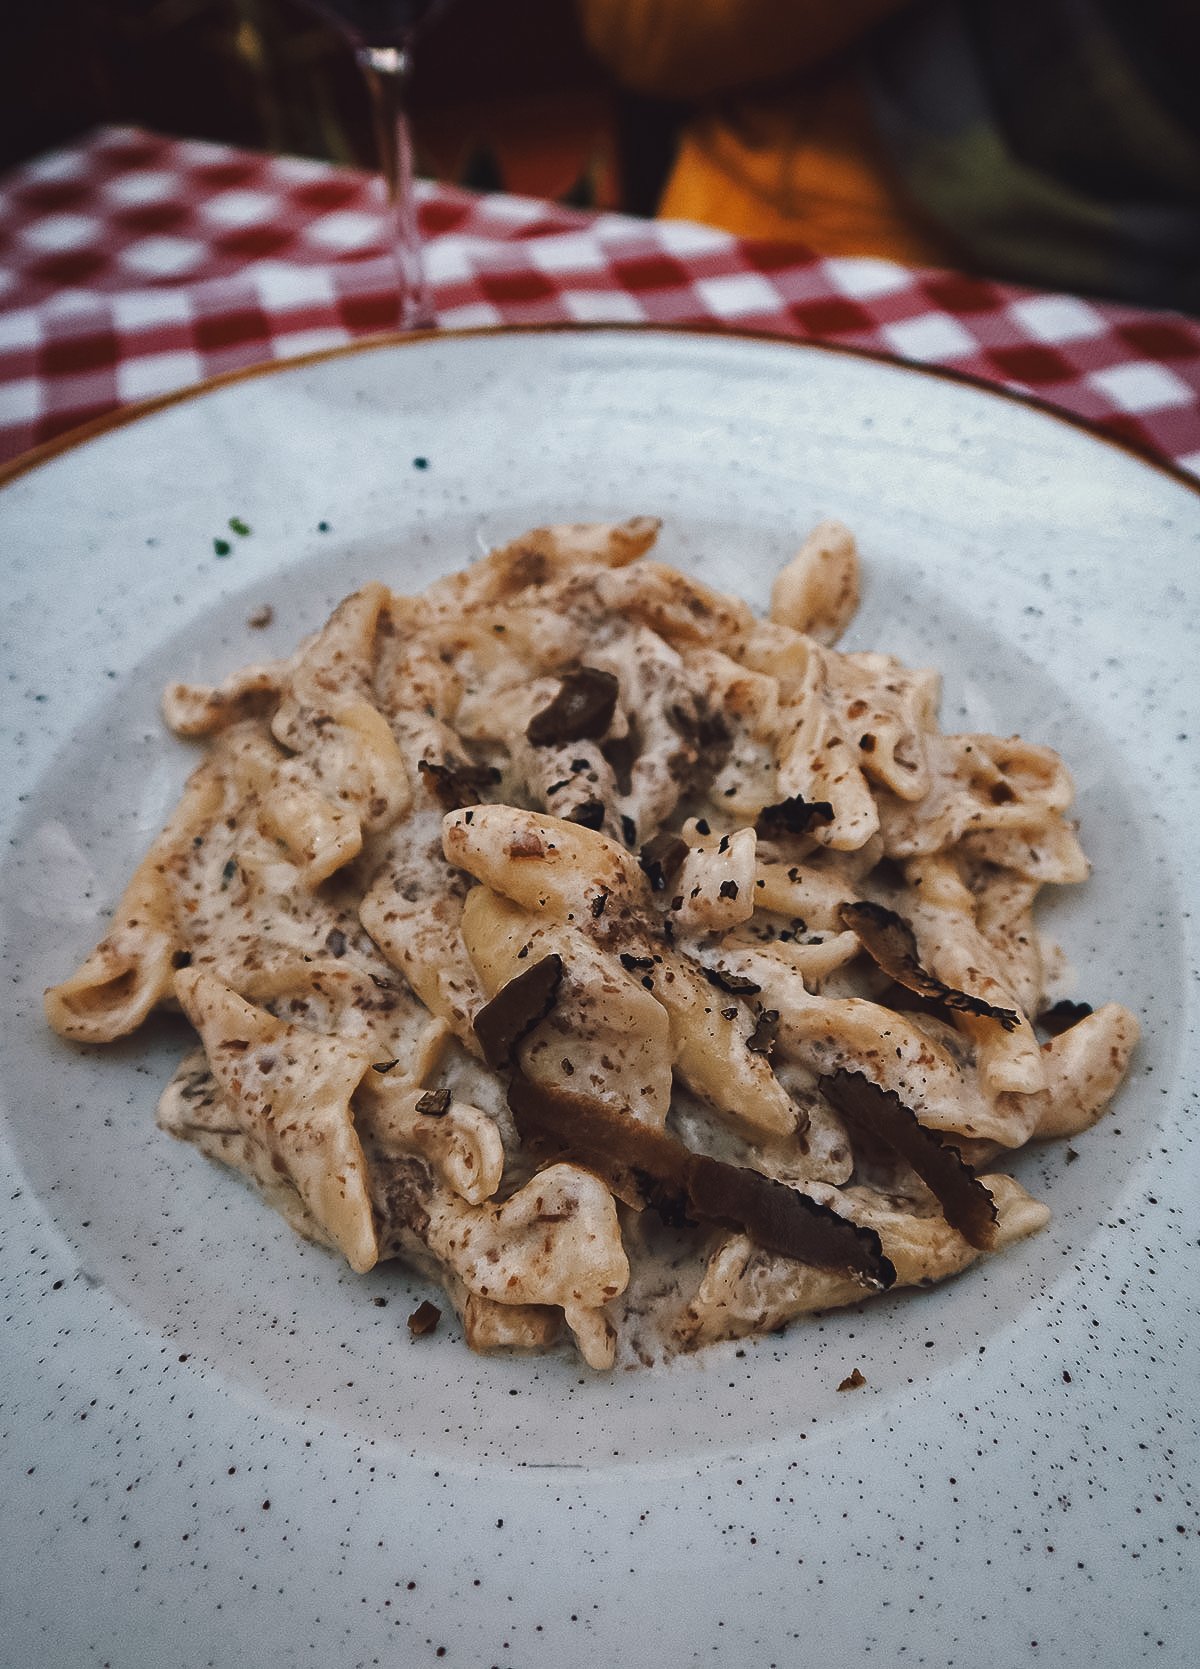 Truffle pasta dish at a restaurant in Rovinj